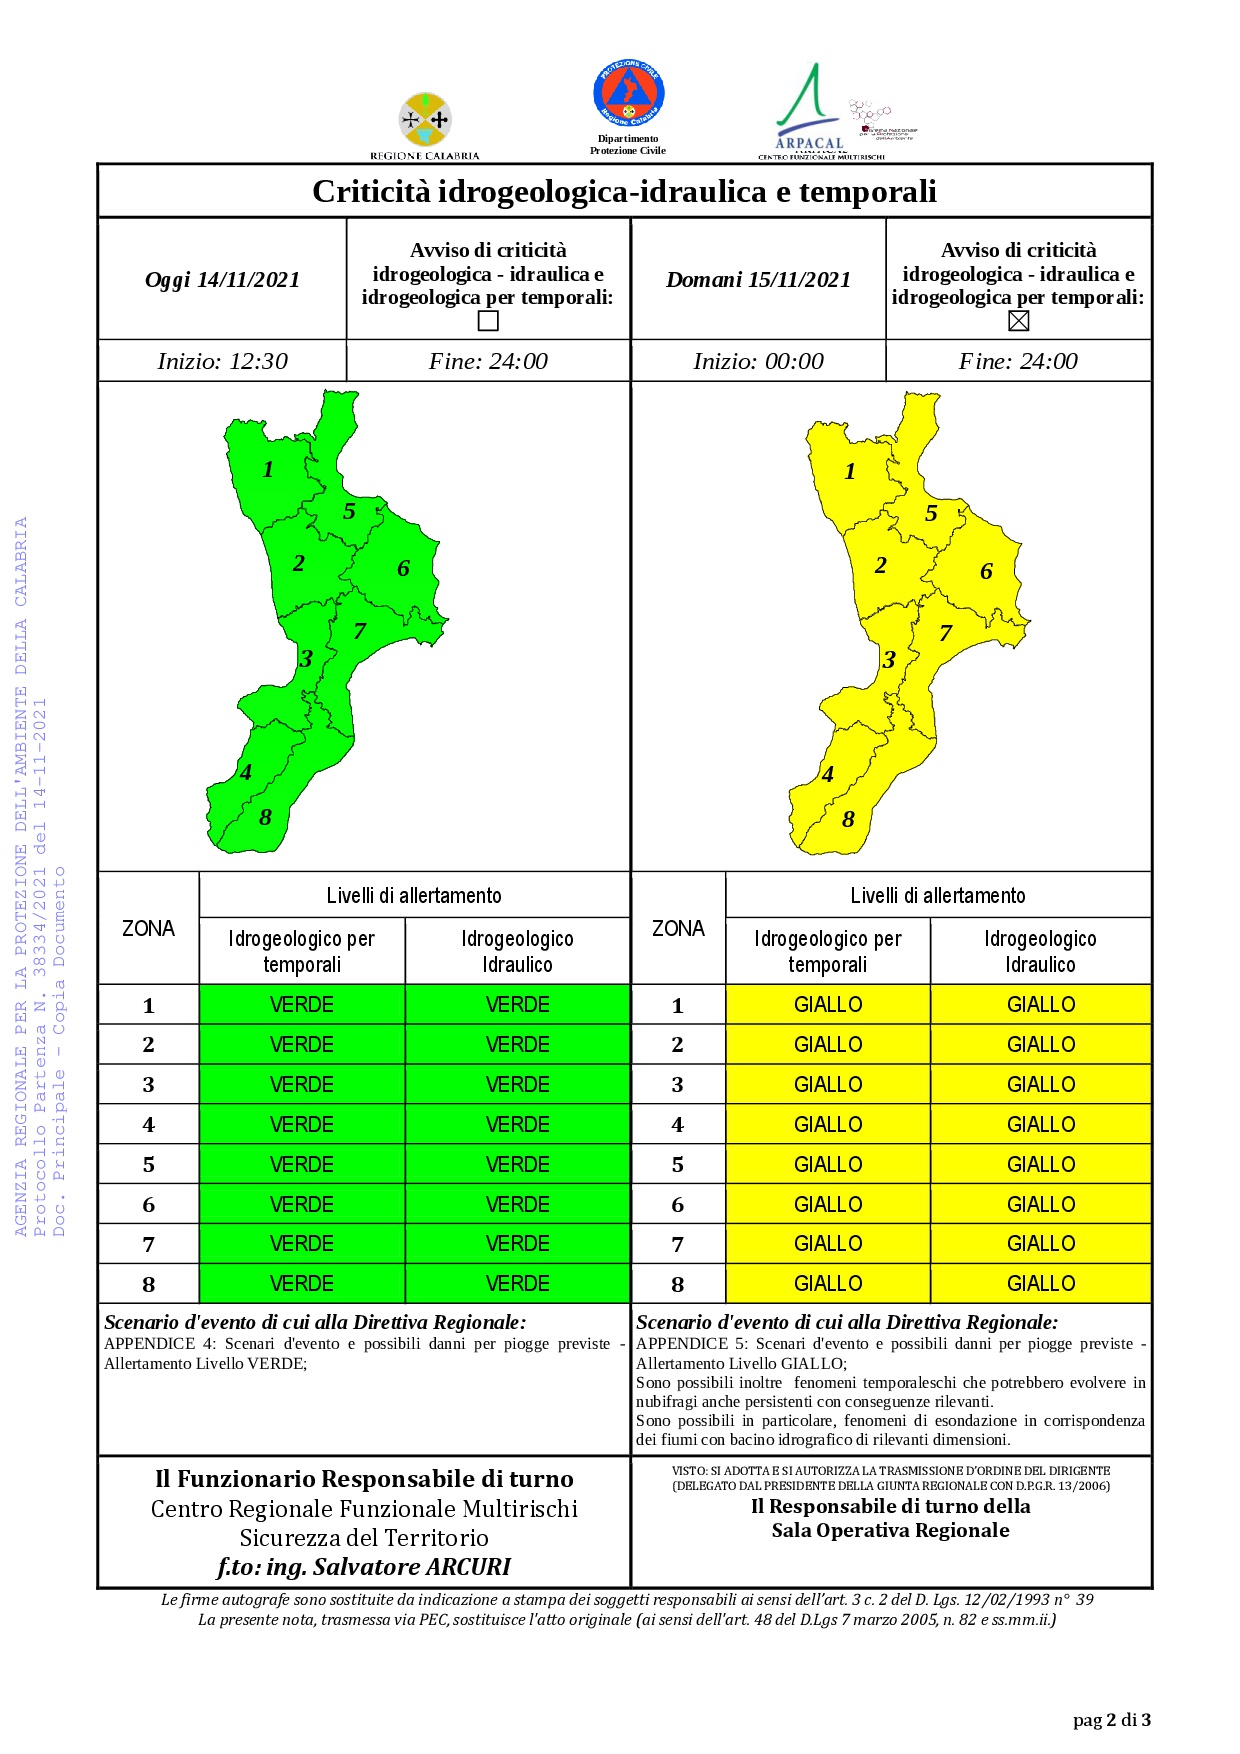 Criticità idrogeologica-idraulica e temporali in Calabria 14-11-2021